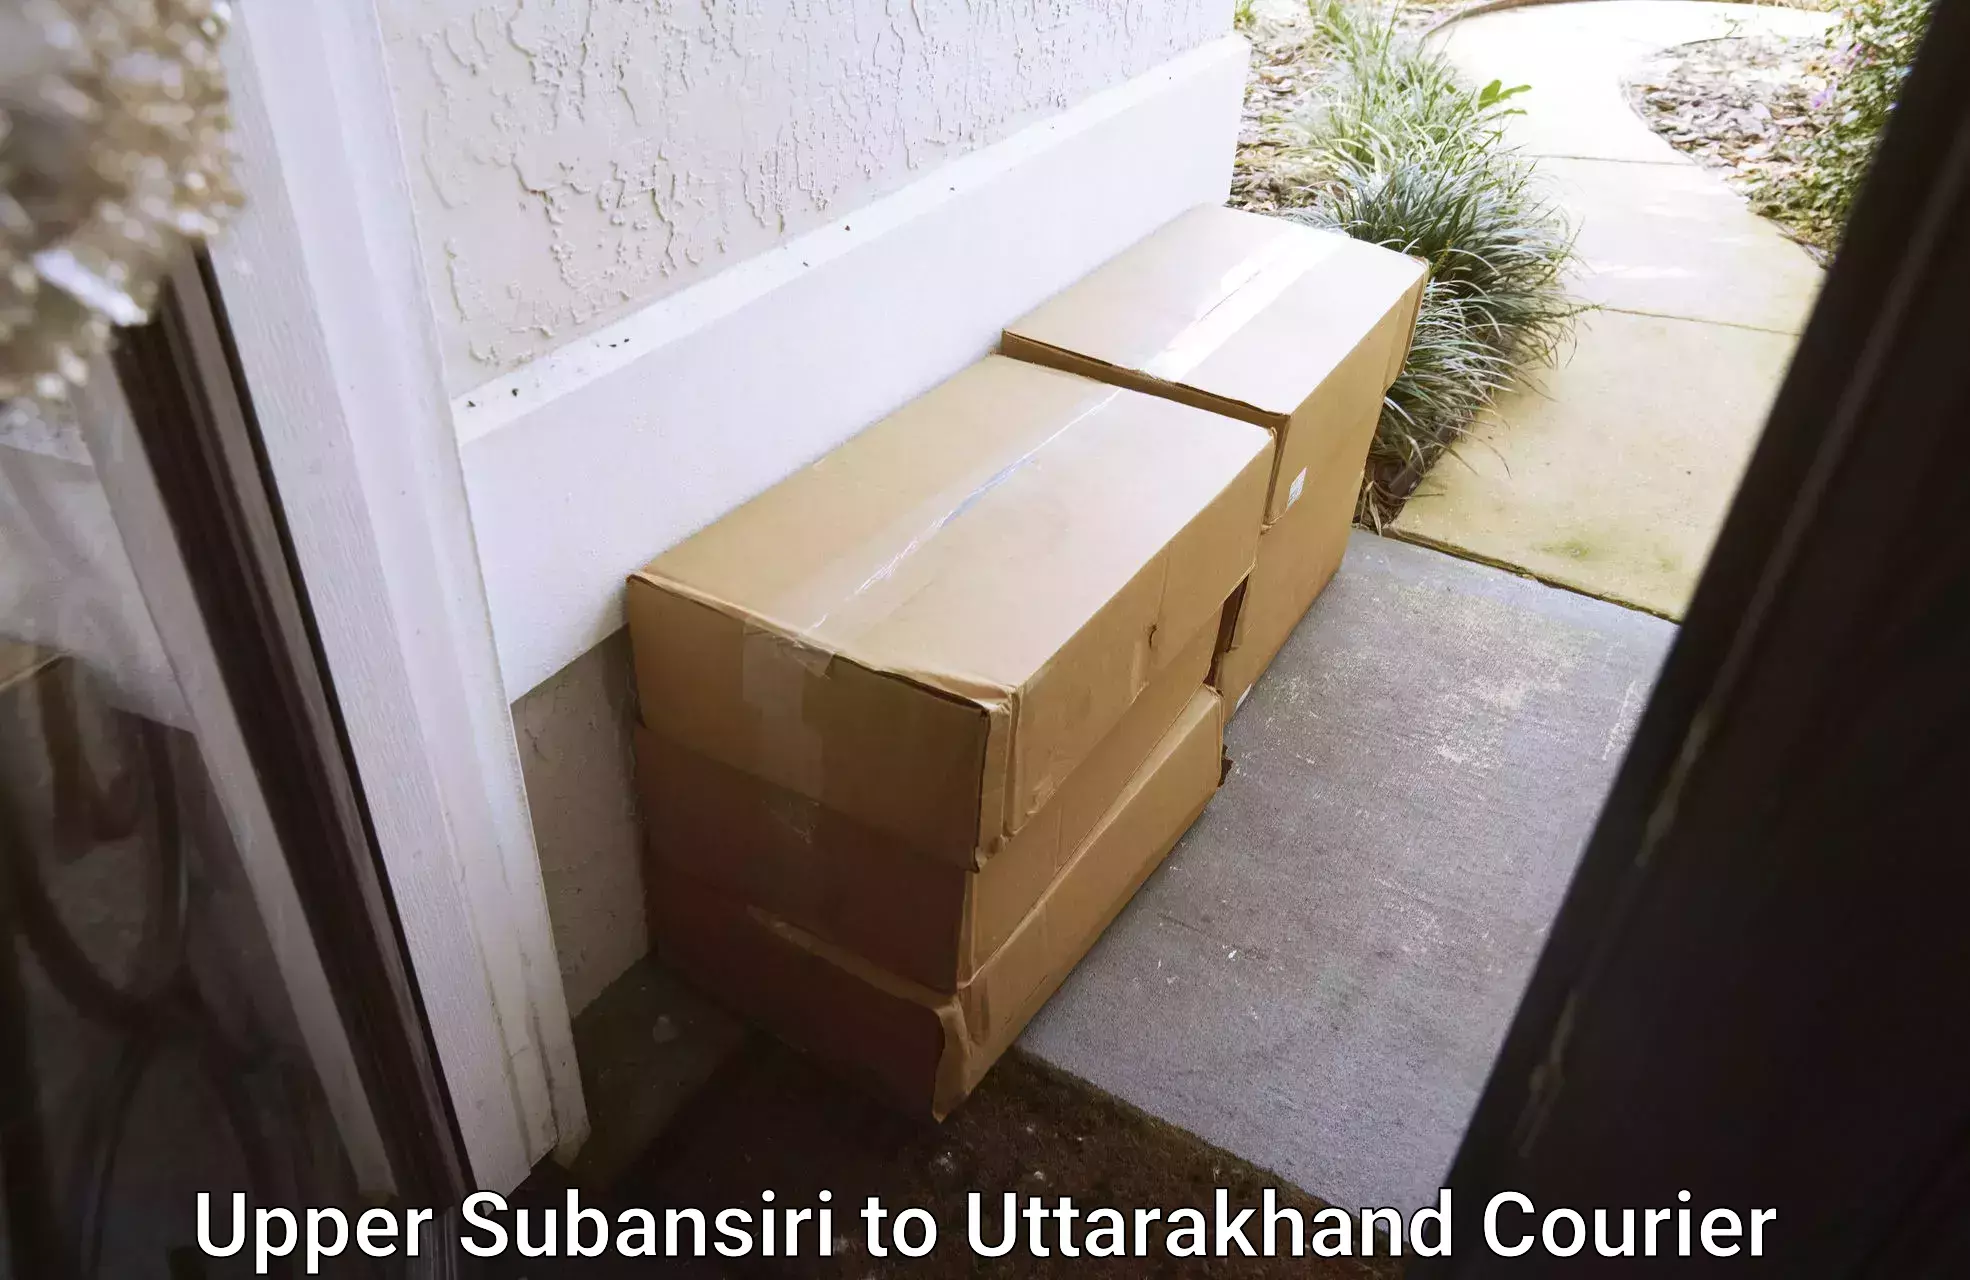 Urgent courier needs Upper Subansiri to Almora